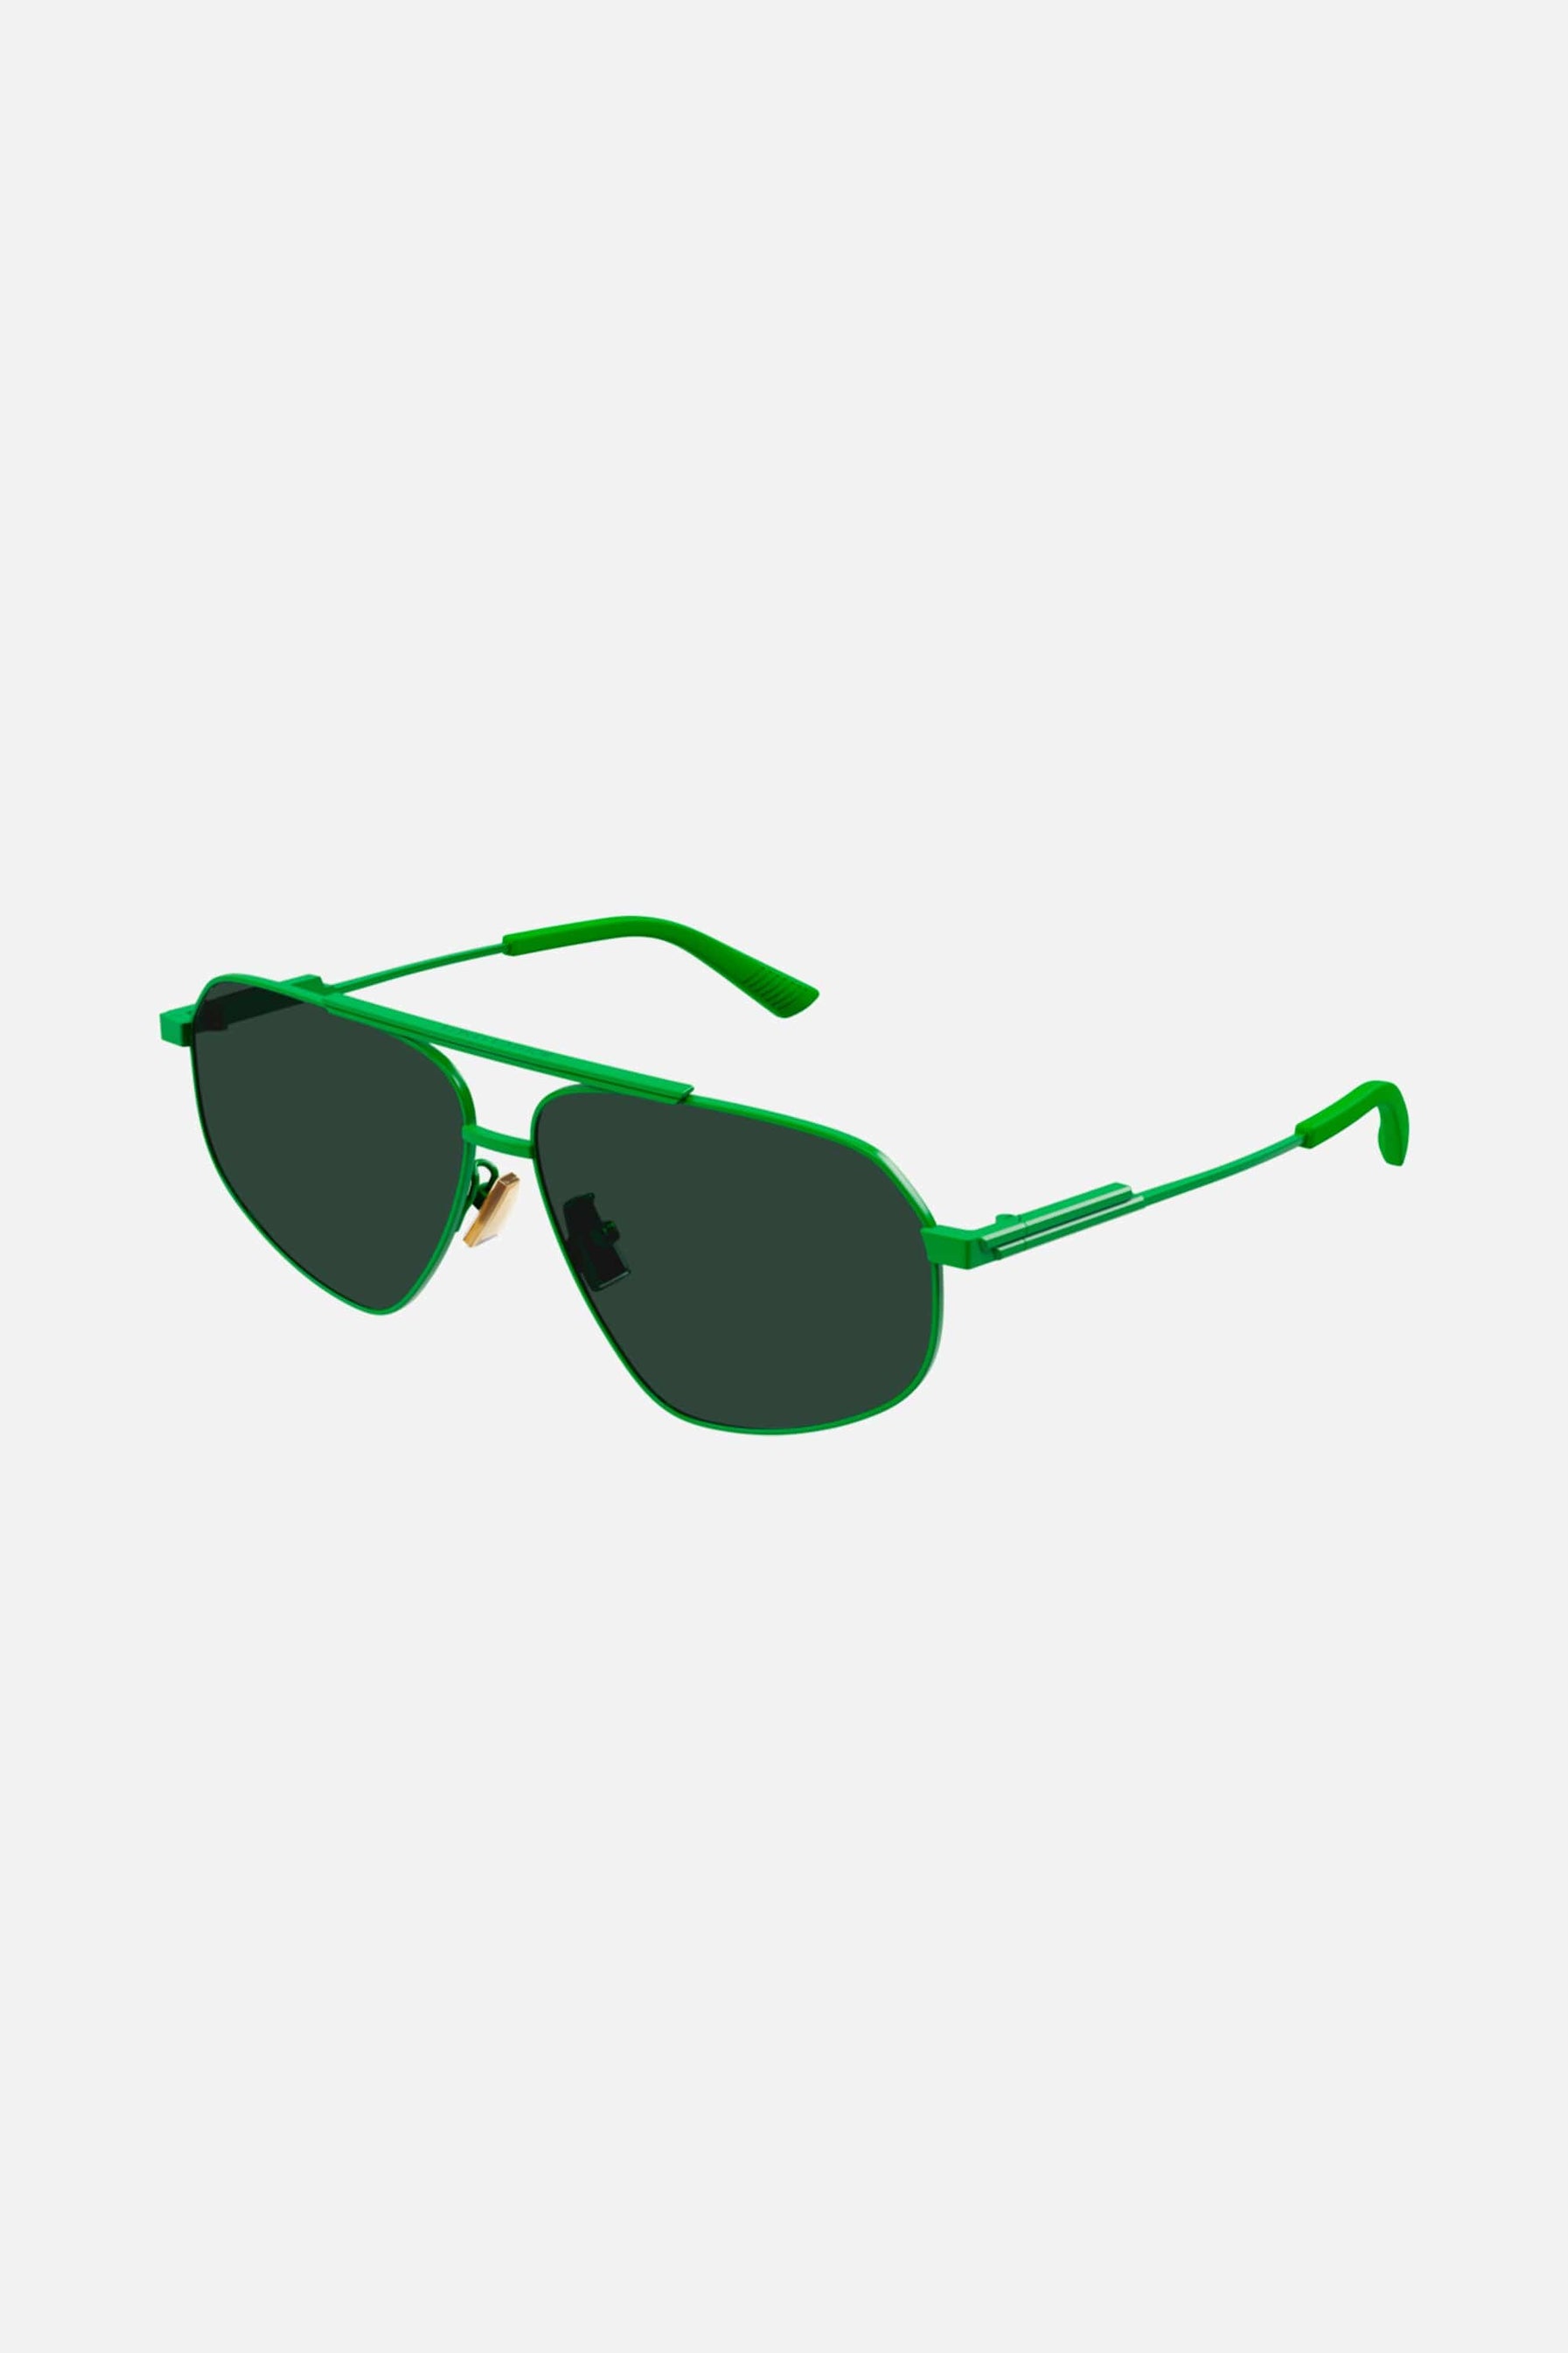 Bottega Veneta geometric caravan metal green sunglasses - Eyewear Club